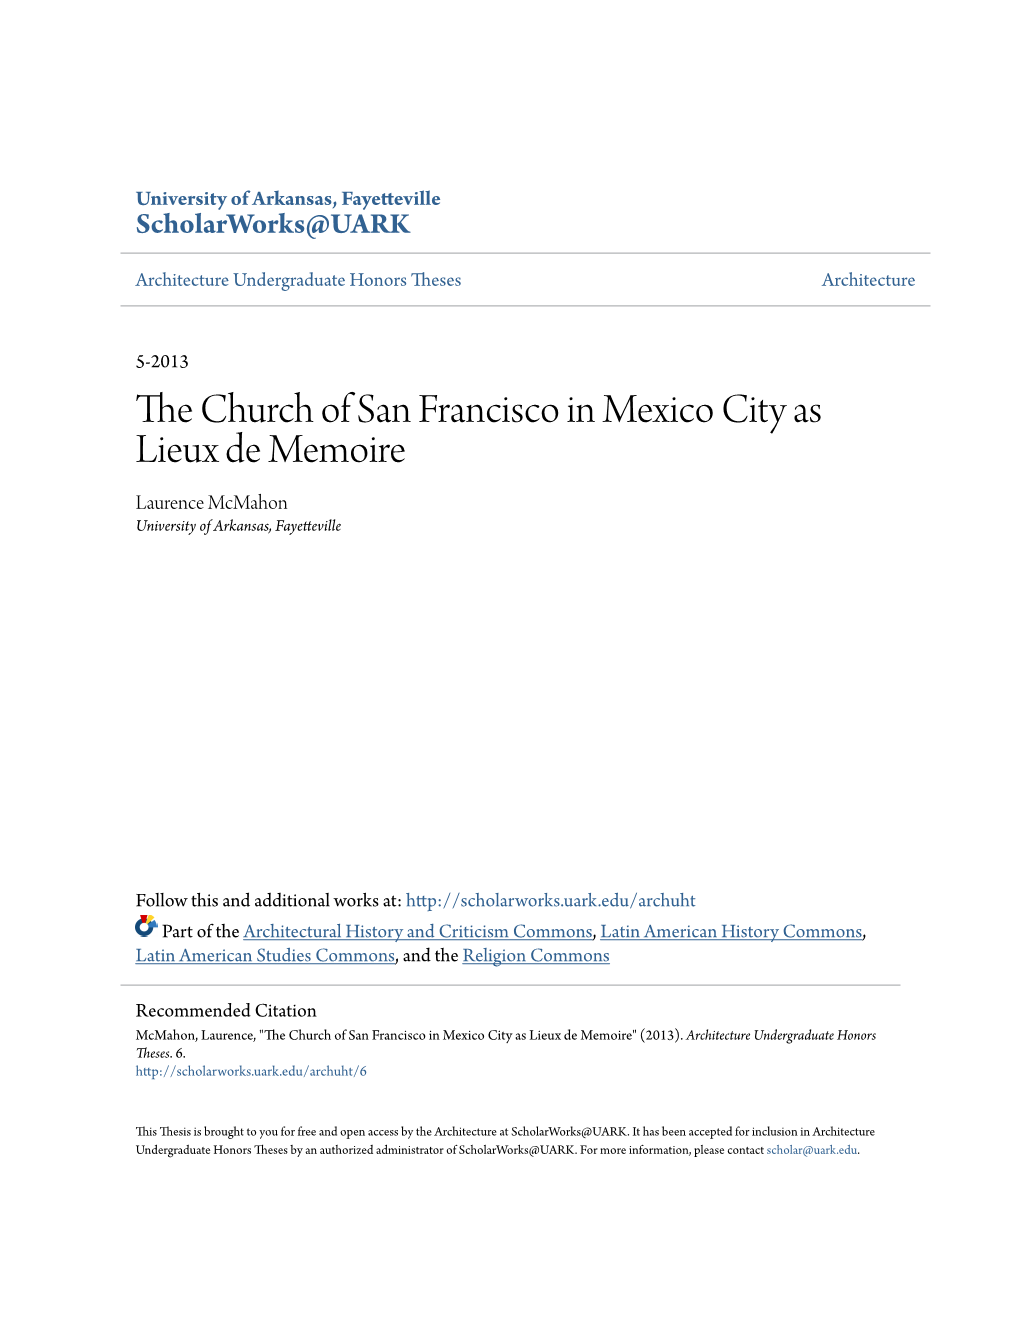 The Church of San Francisco in Mexico City As Lieux De Memoire